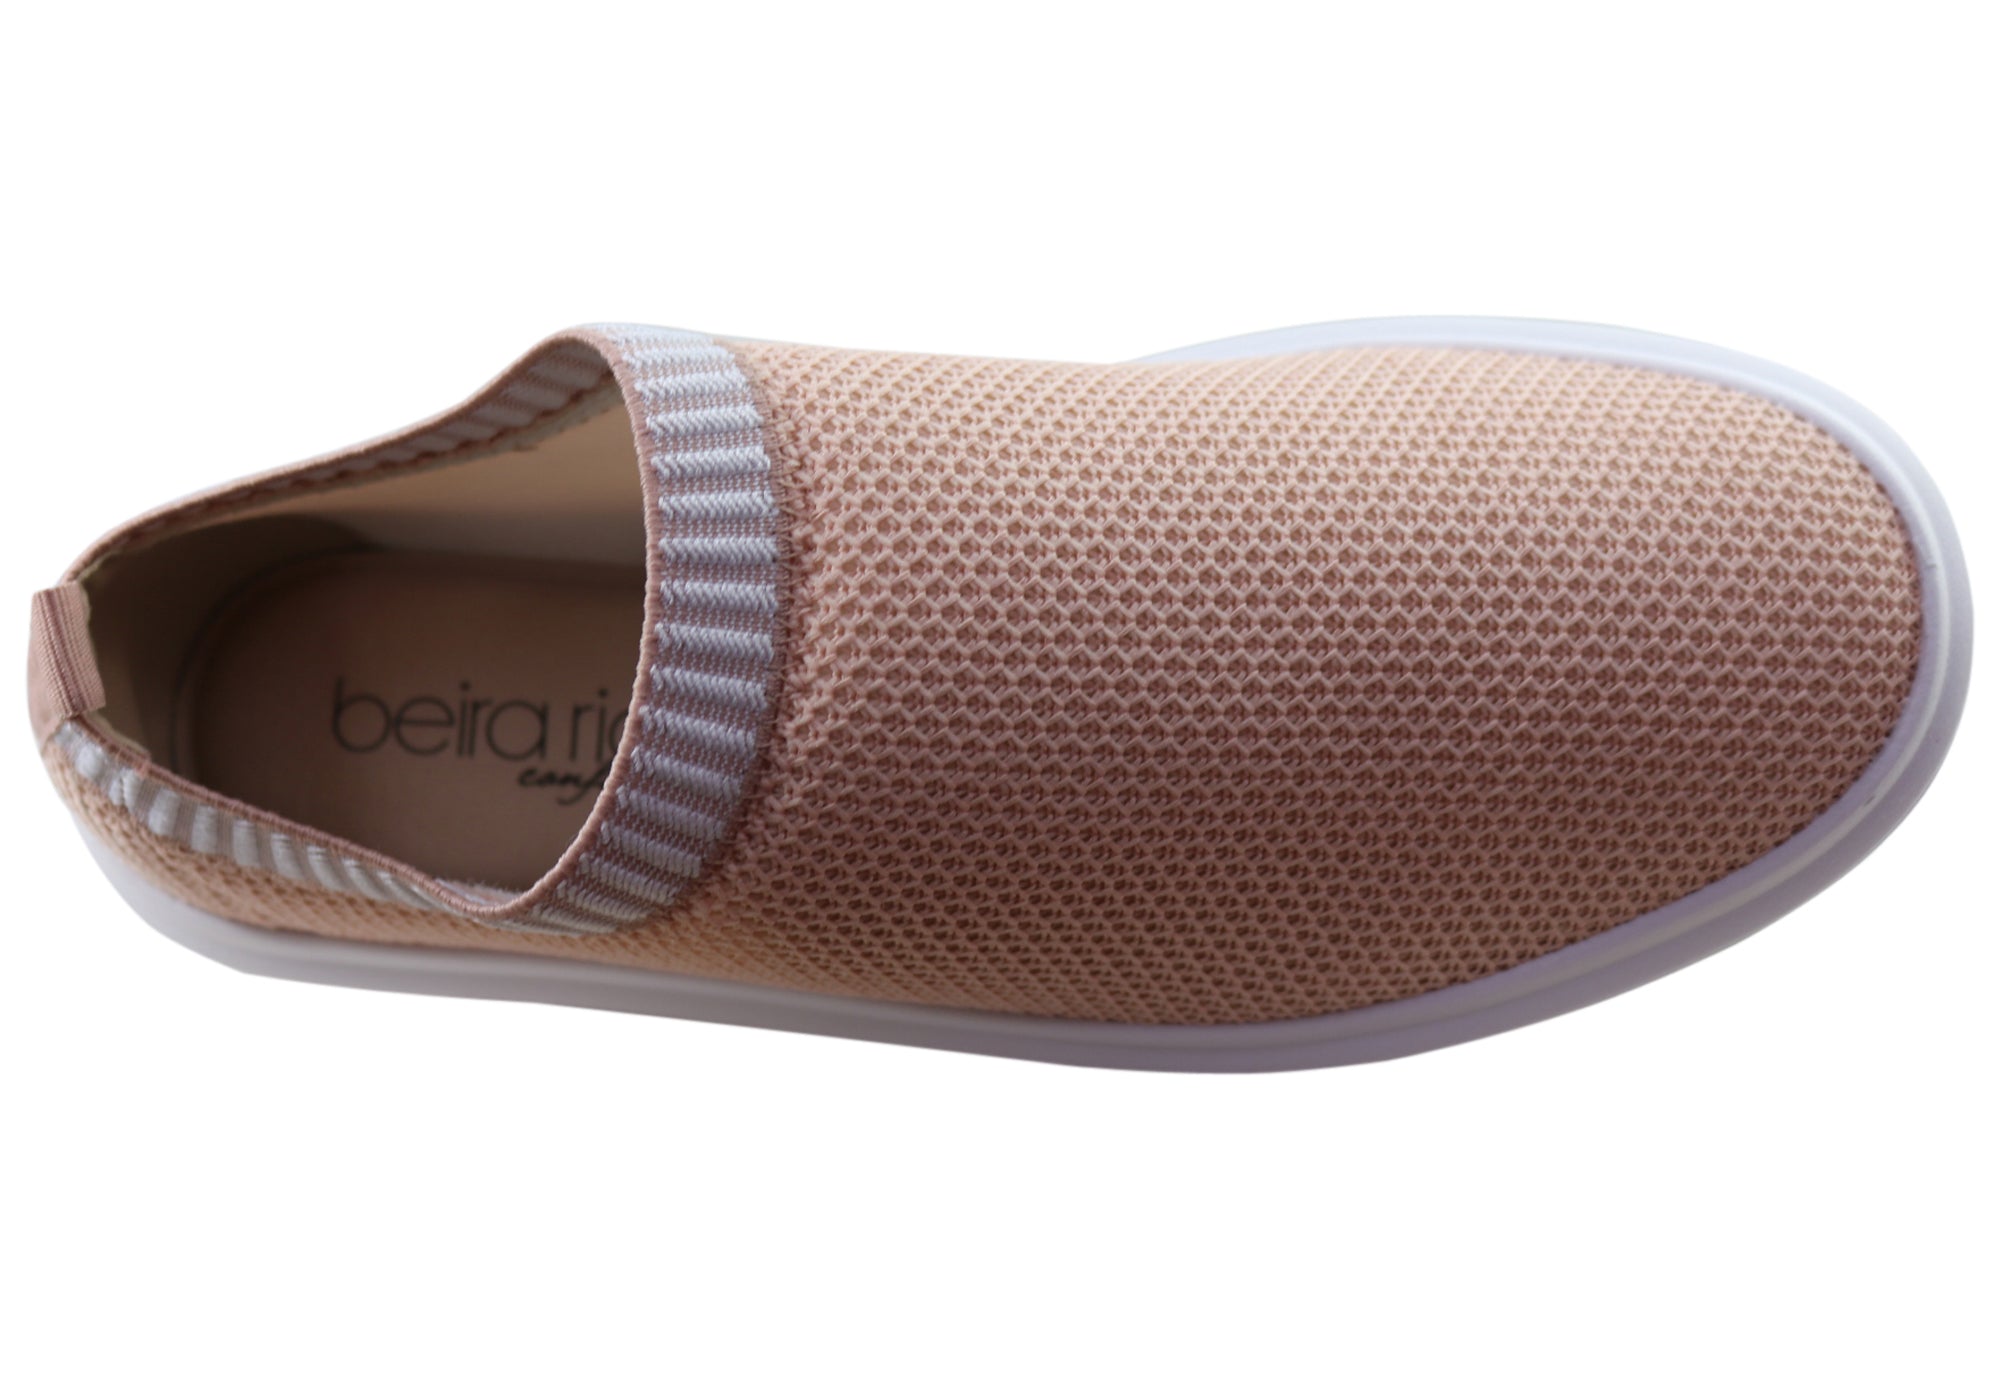 Beira Rio Conforto Cipriana Womens Comfort Casual Shoes Made In Brazil